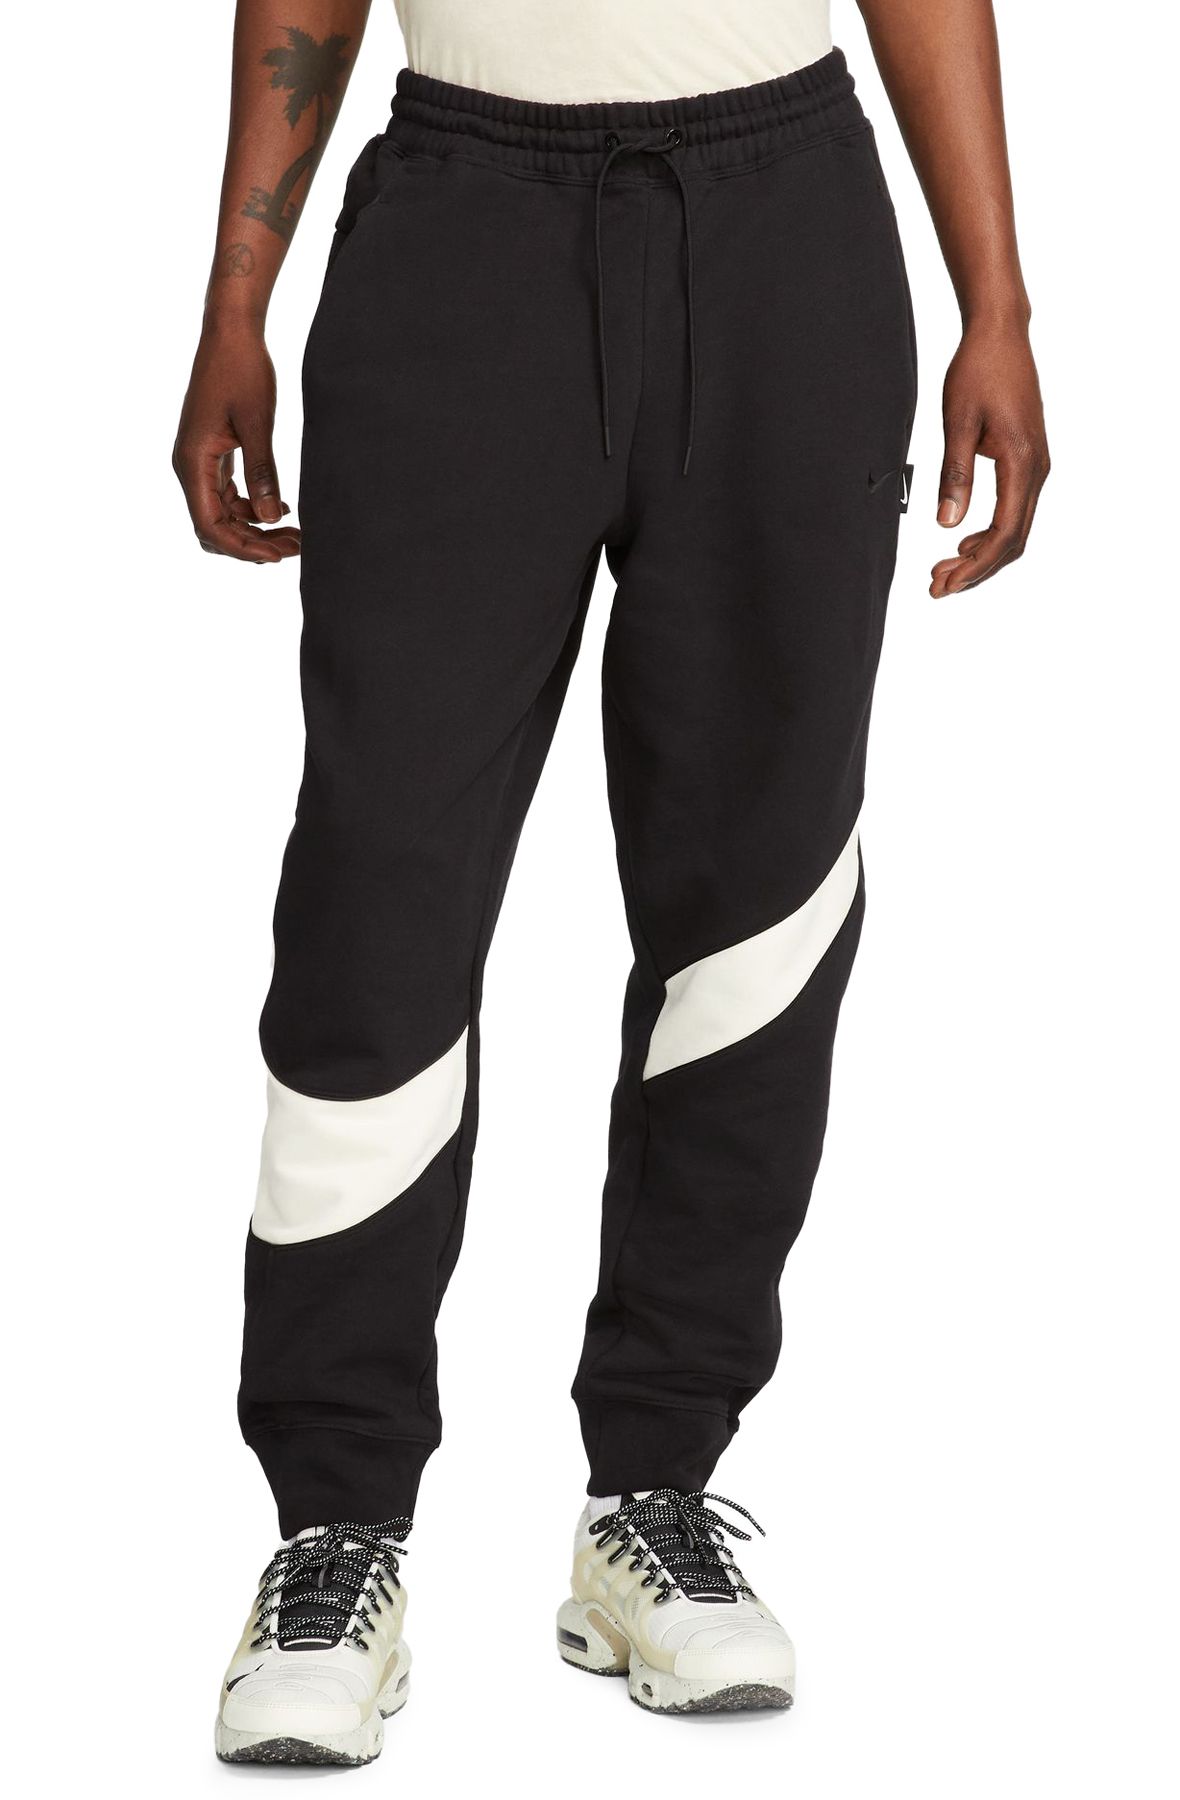 Nike Plus Trend Fleece loose fit sweatpants in black